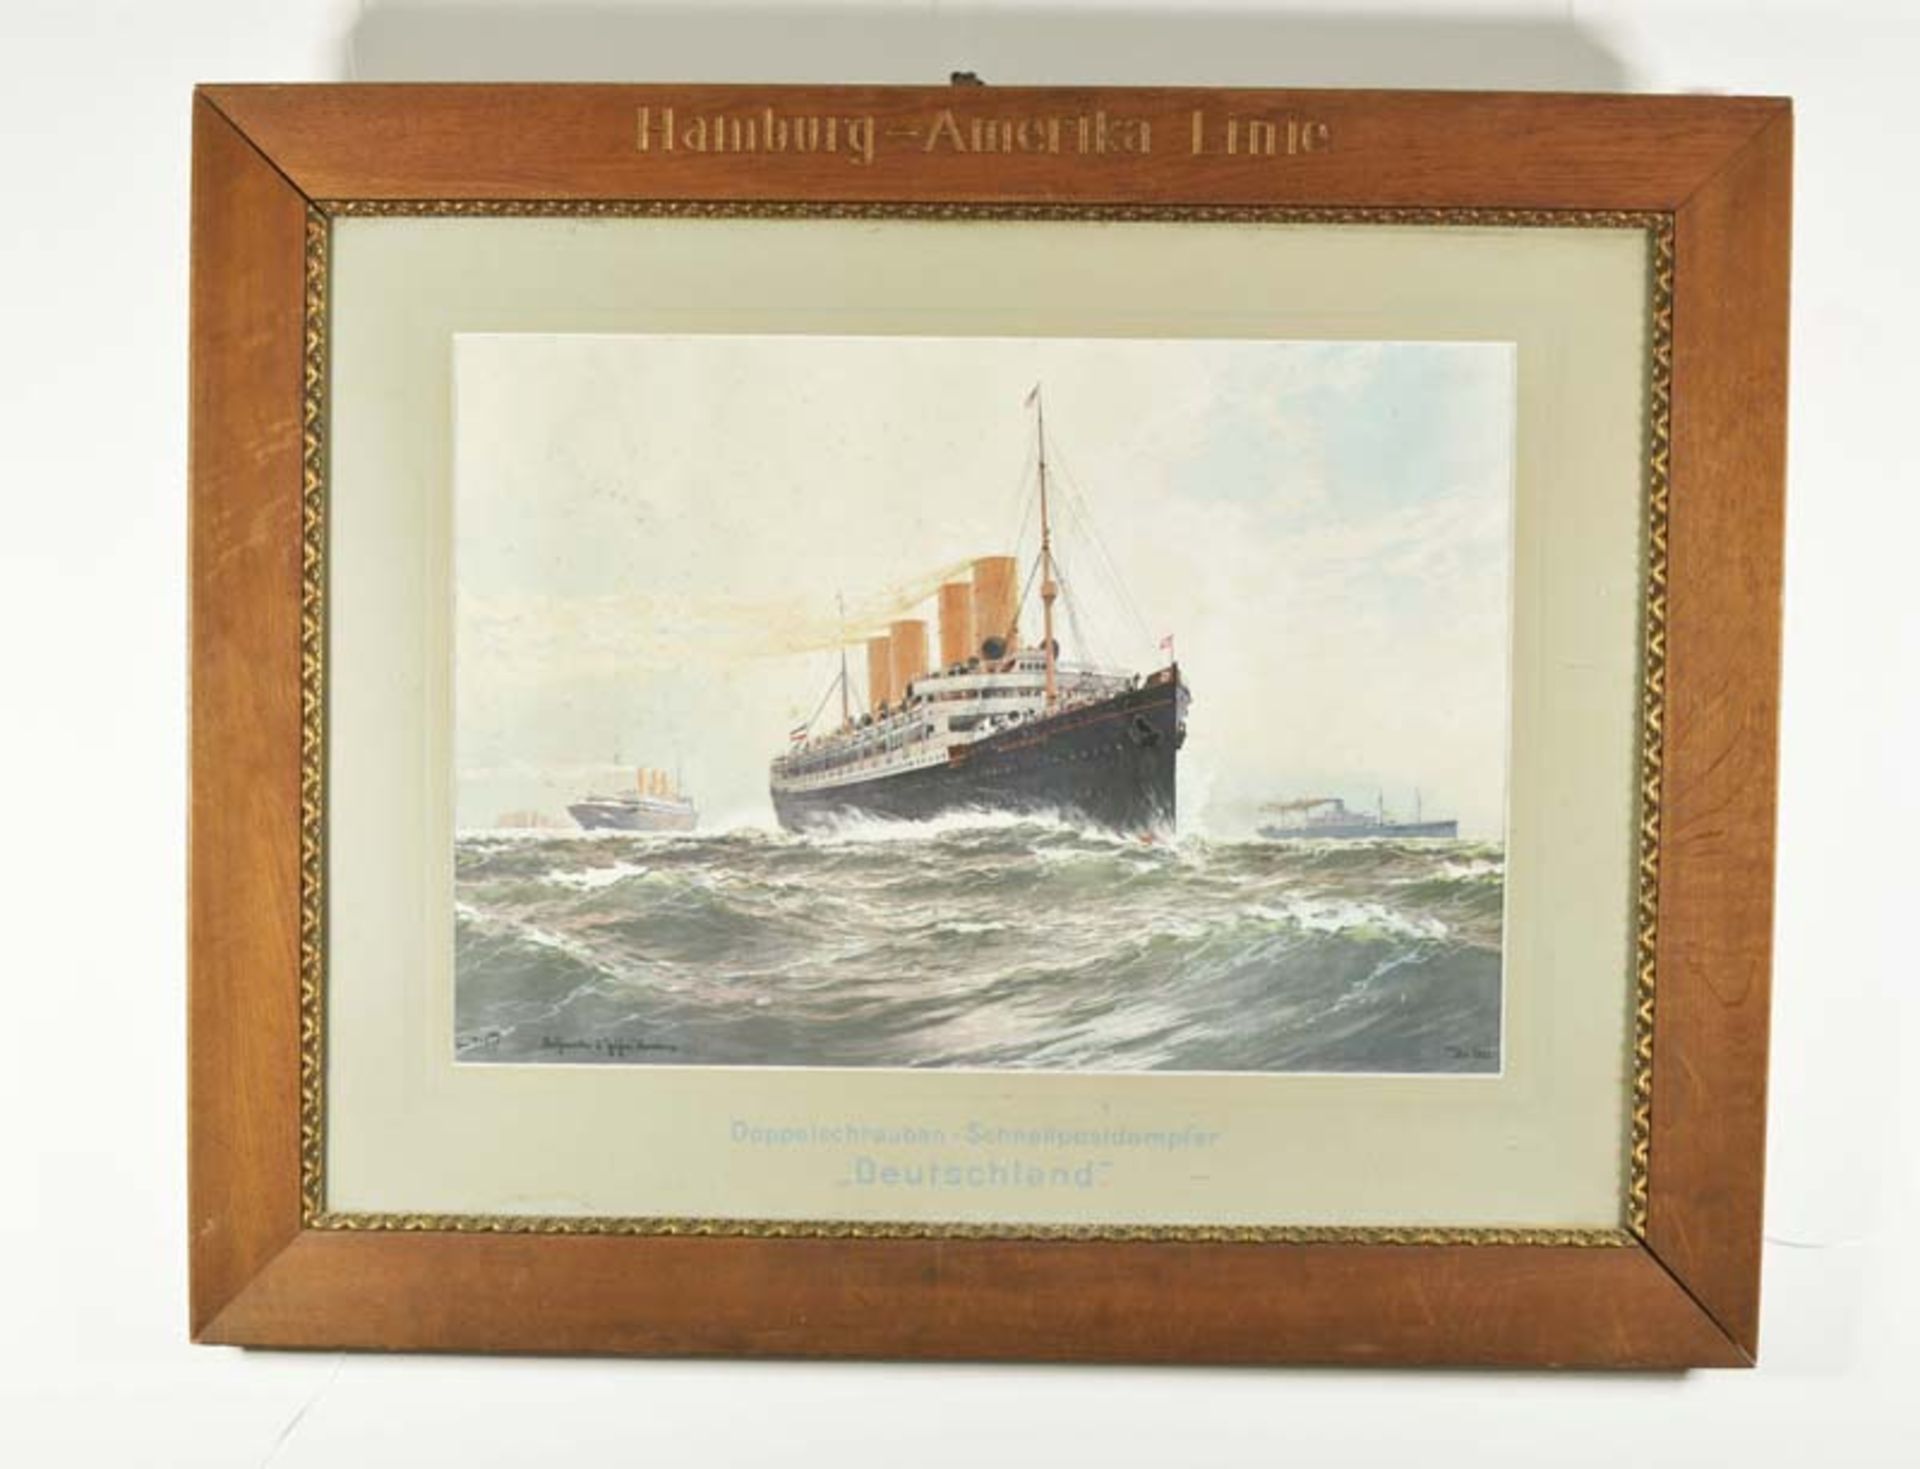 Hamburg-Amerika Line, Ship Image in wooden frame, slightly stainy, no shipping